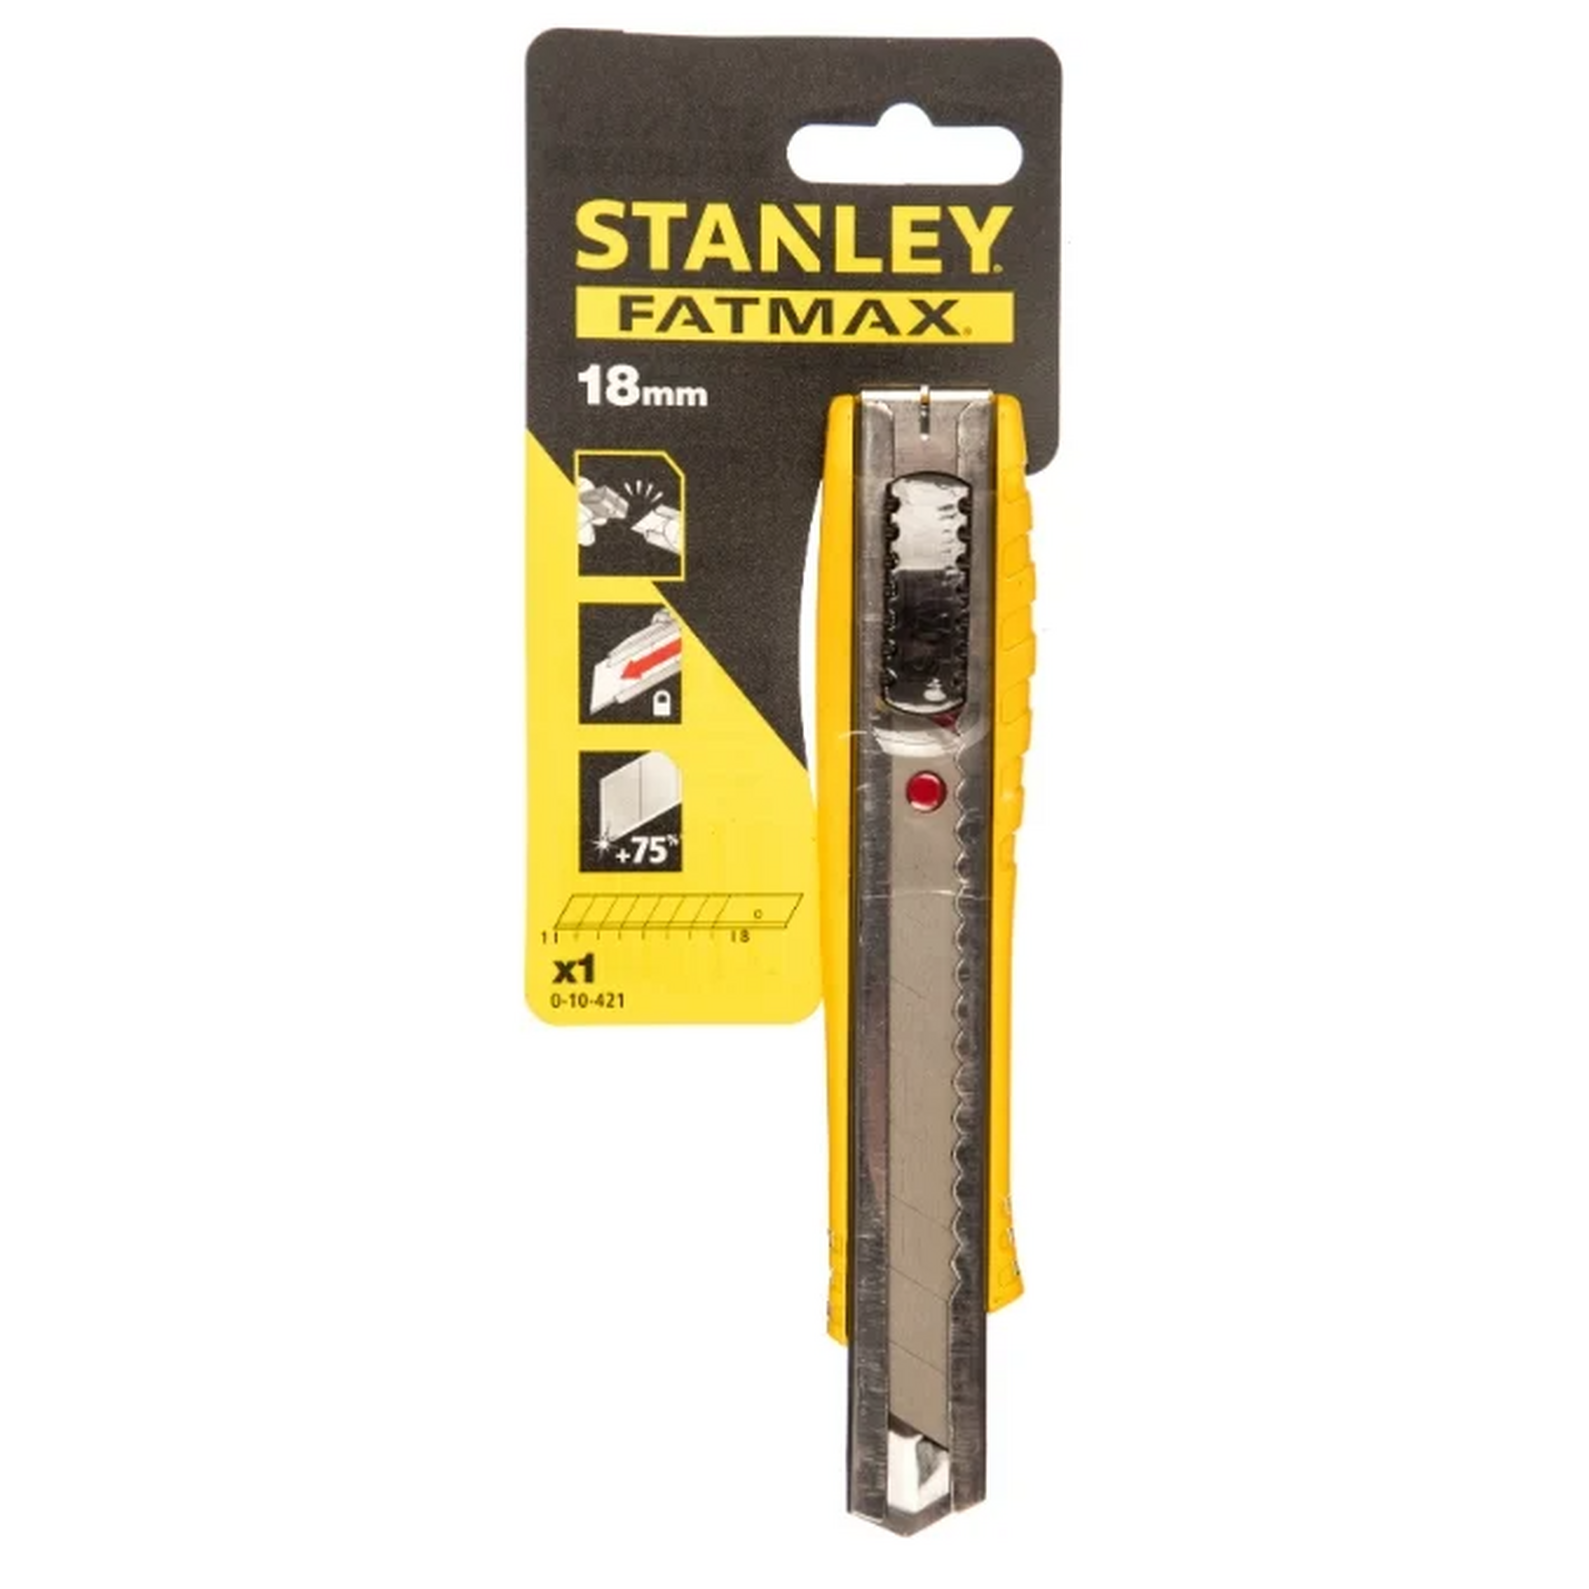 Нож Stanley FatMax 18мм металл.корпус 0-10-421